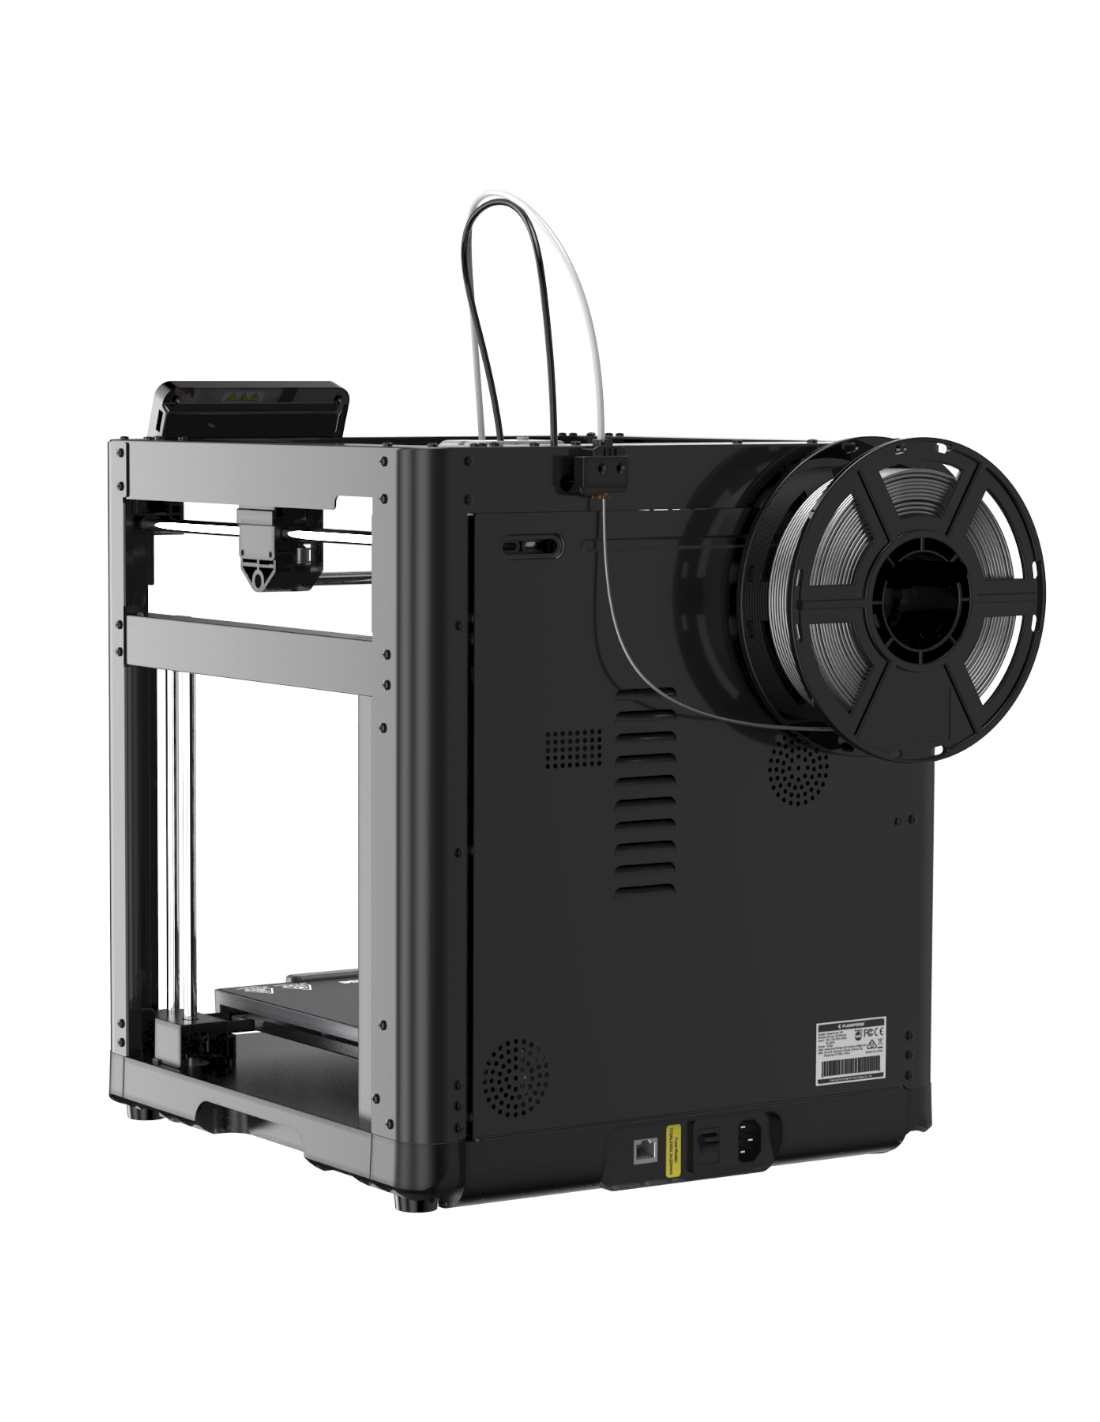 Flashforge Adventurer 5M - Impressora 3D